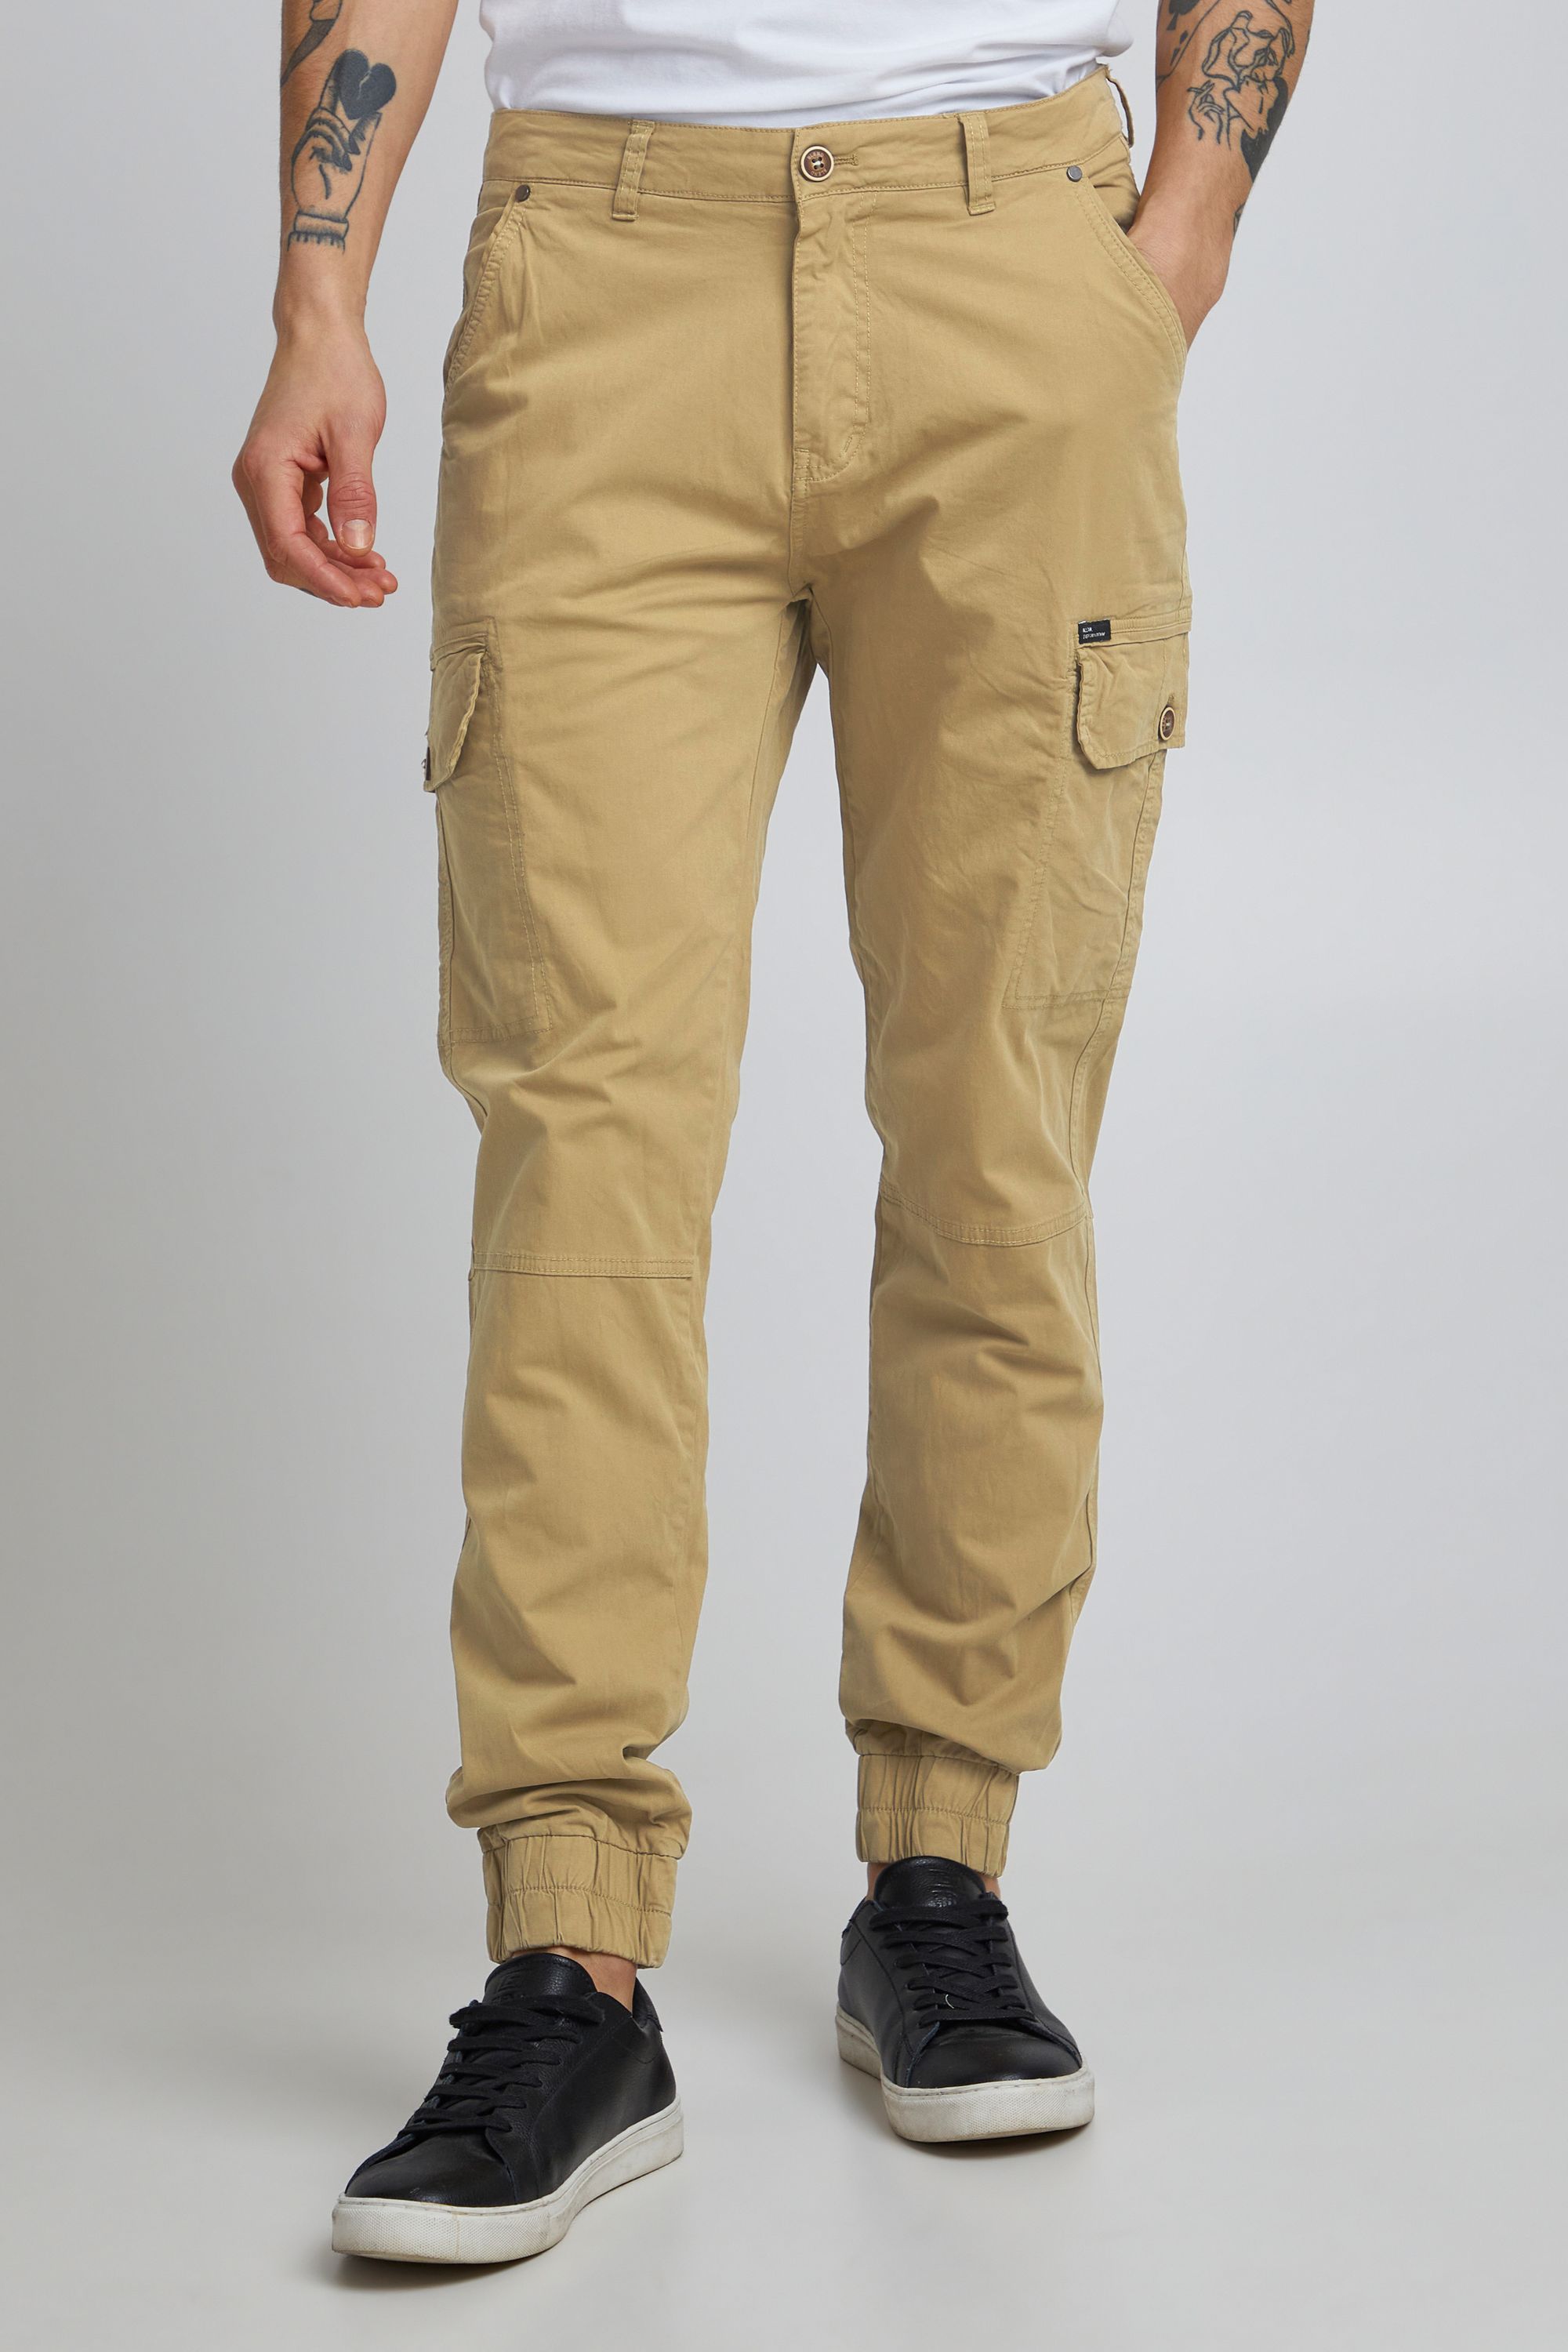 тканевые брюки blend бежевый Тканевые брюки BLEND Cargo, коричневый